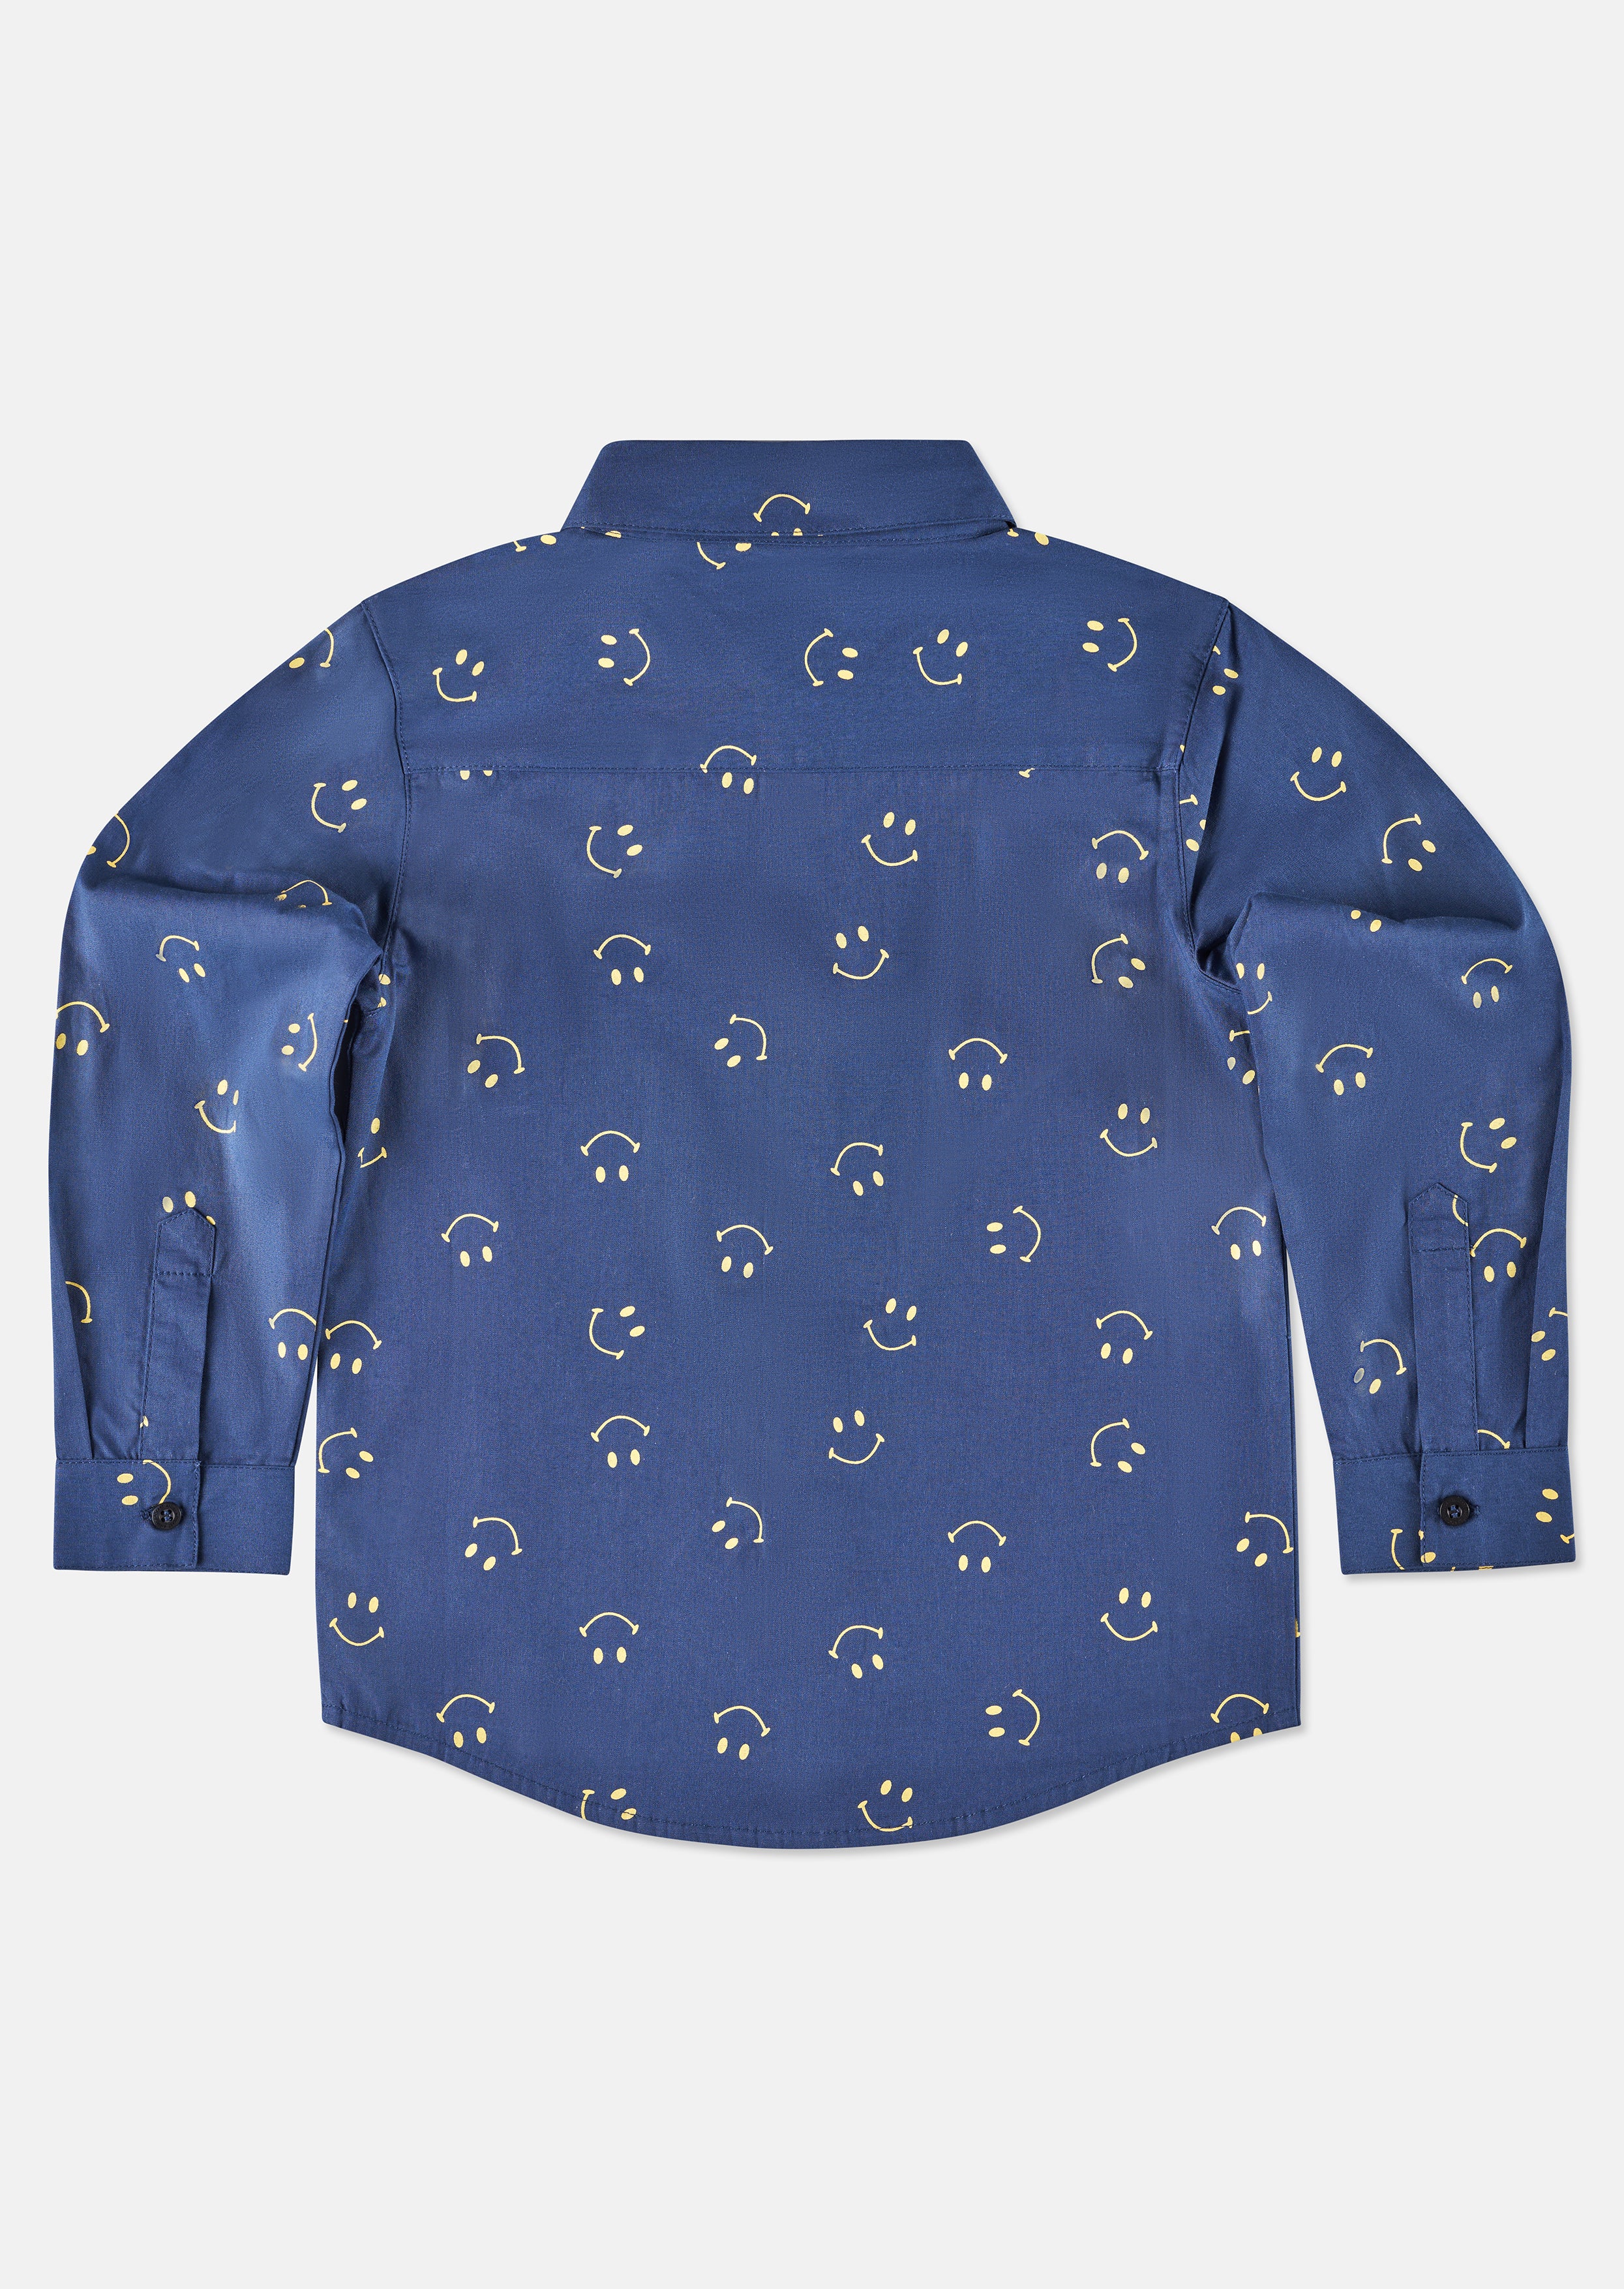 Boys Smile Printed Full Sleeves Blue Shirt